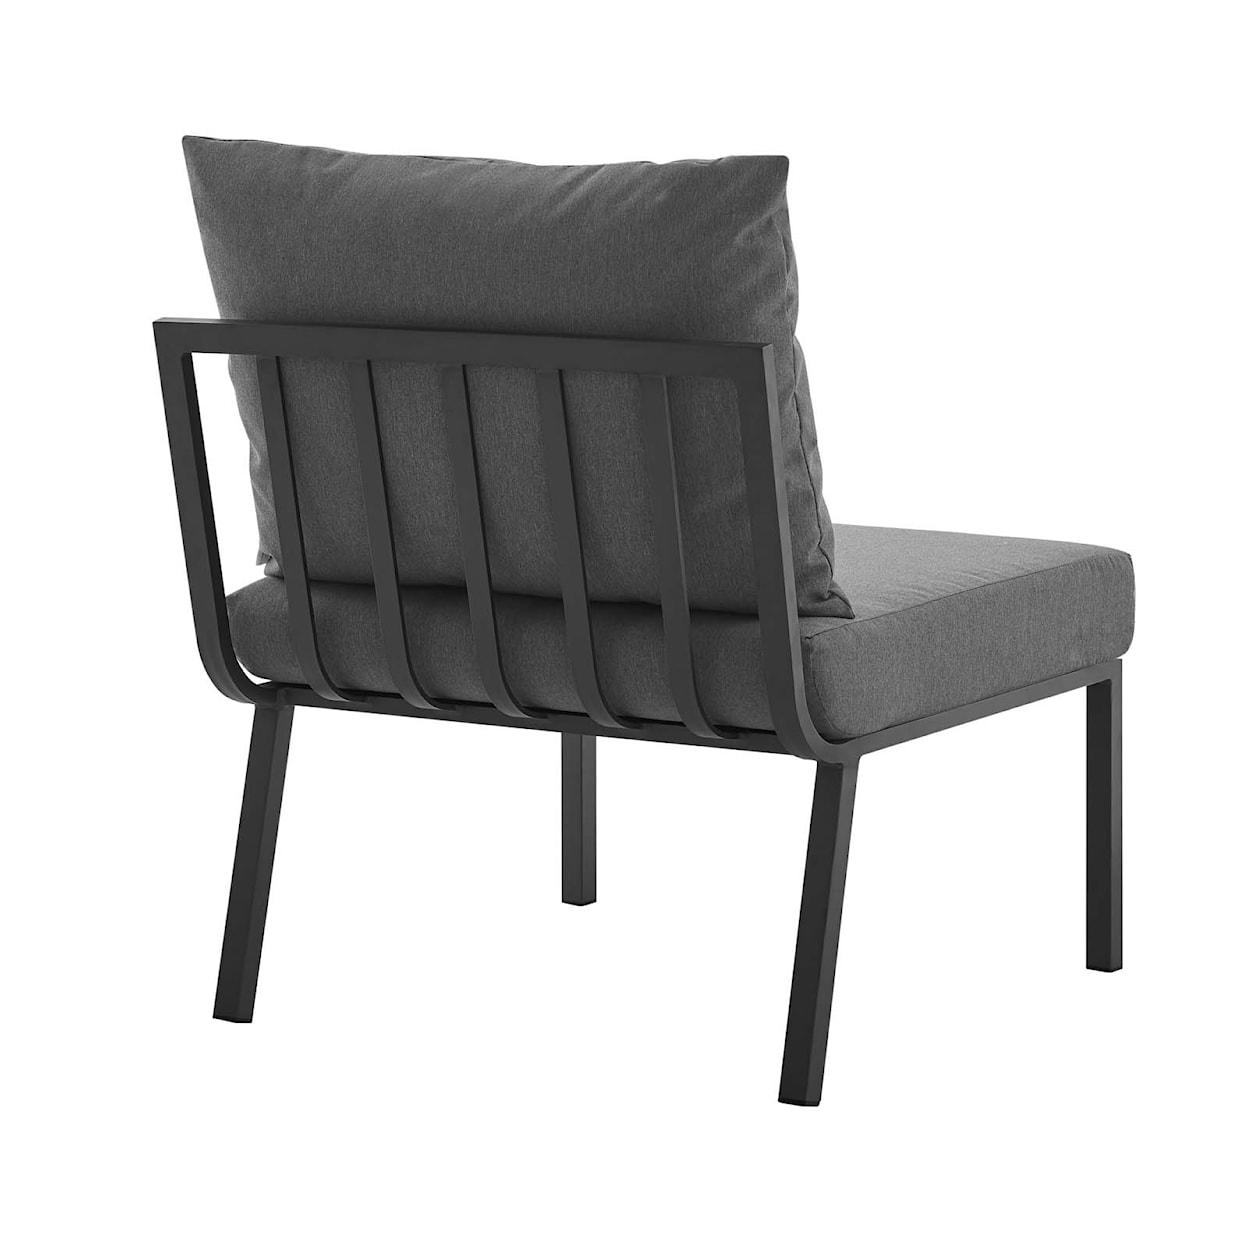 Modway Riverside Outdoor Armless Chair